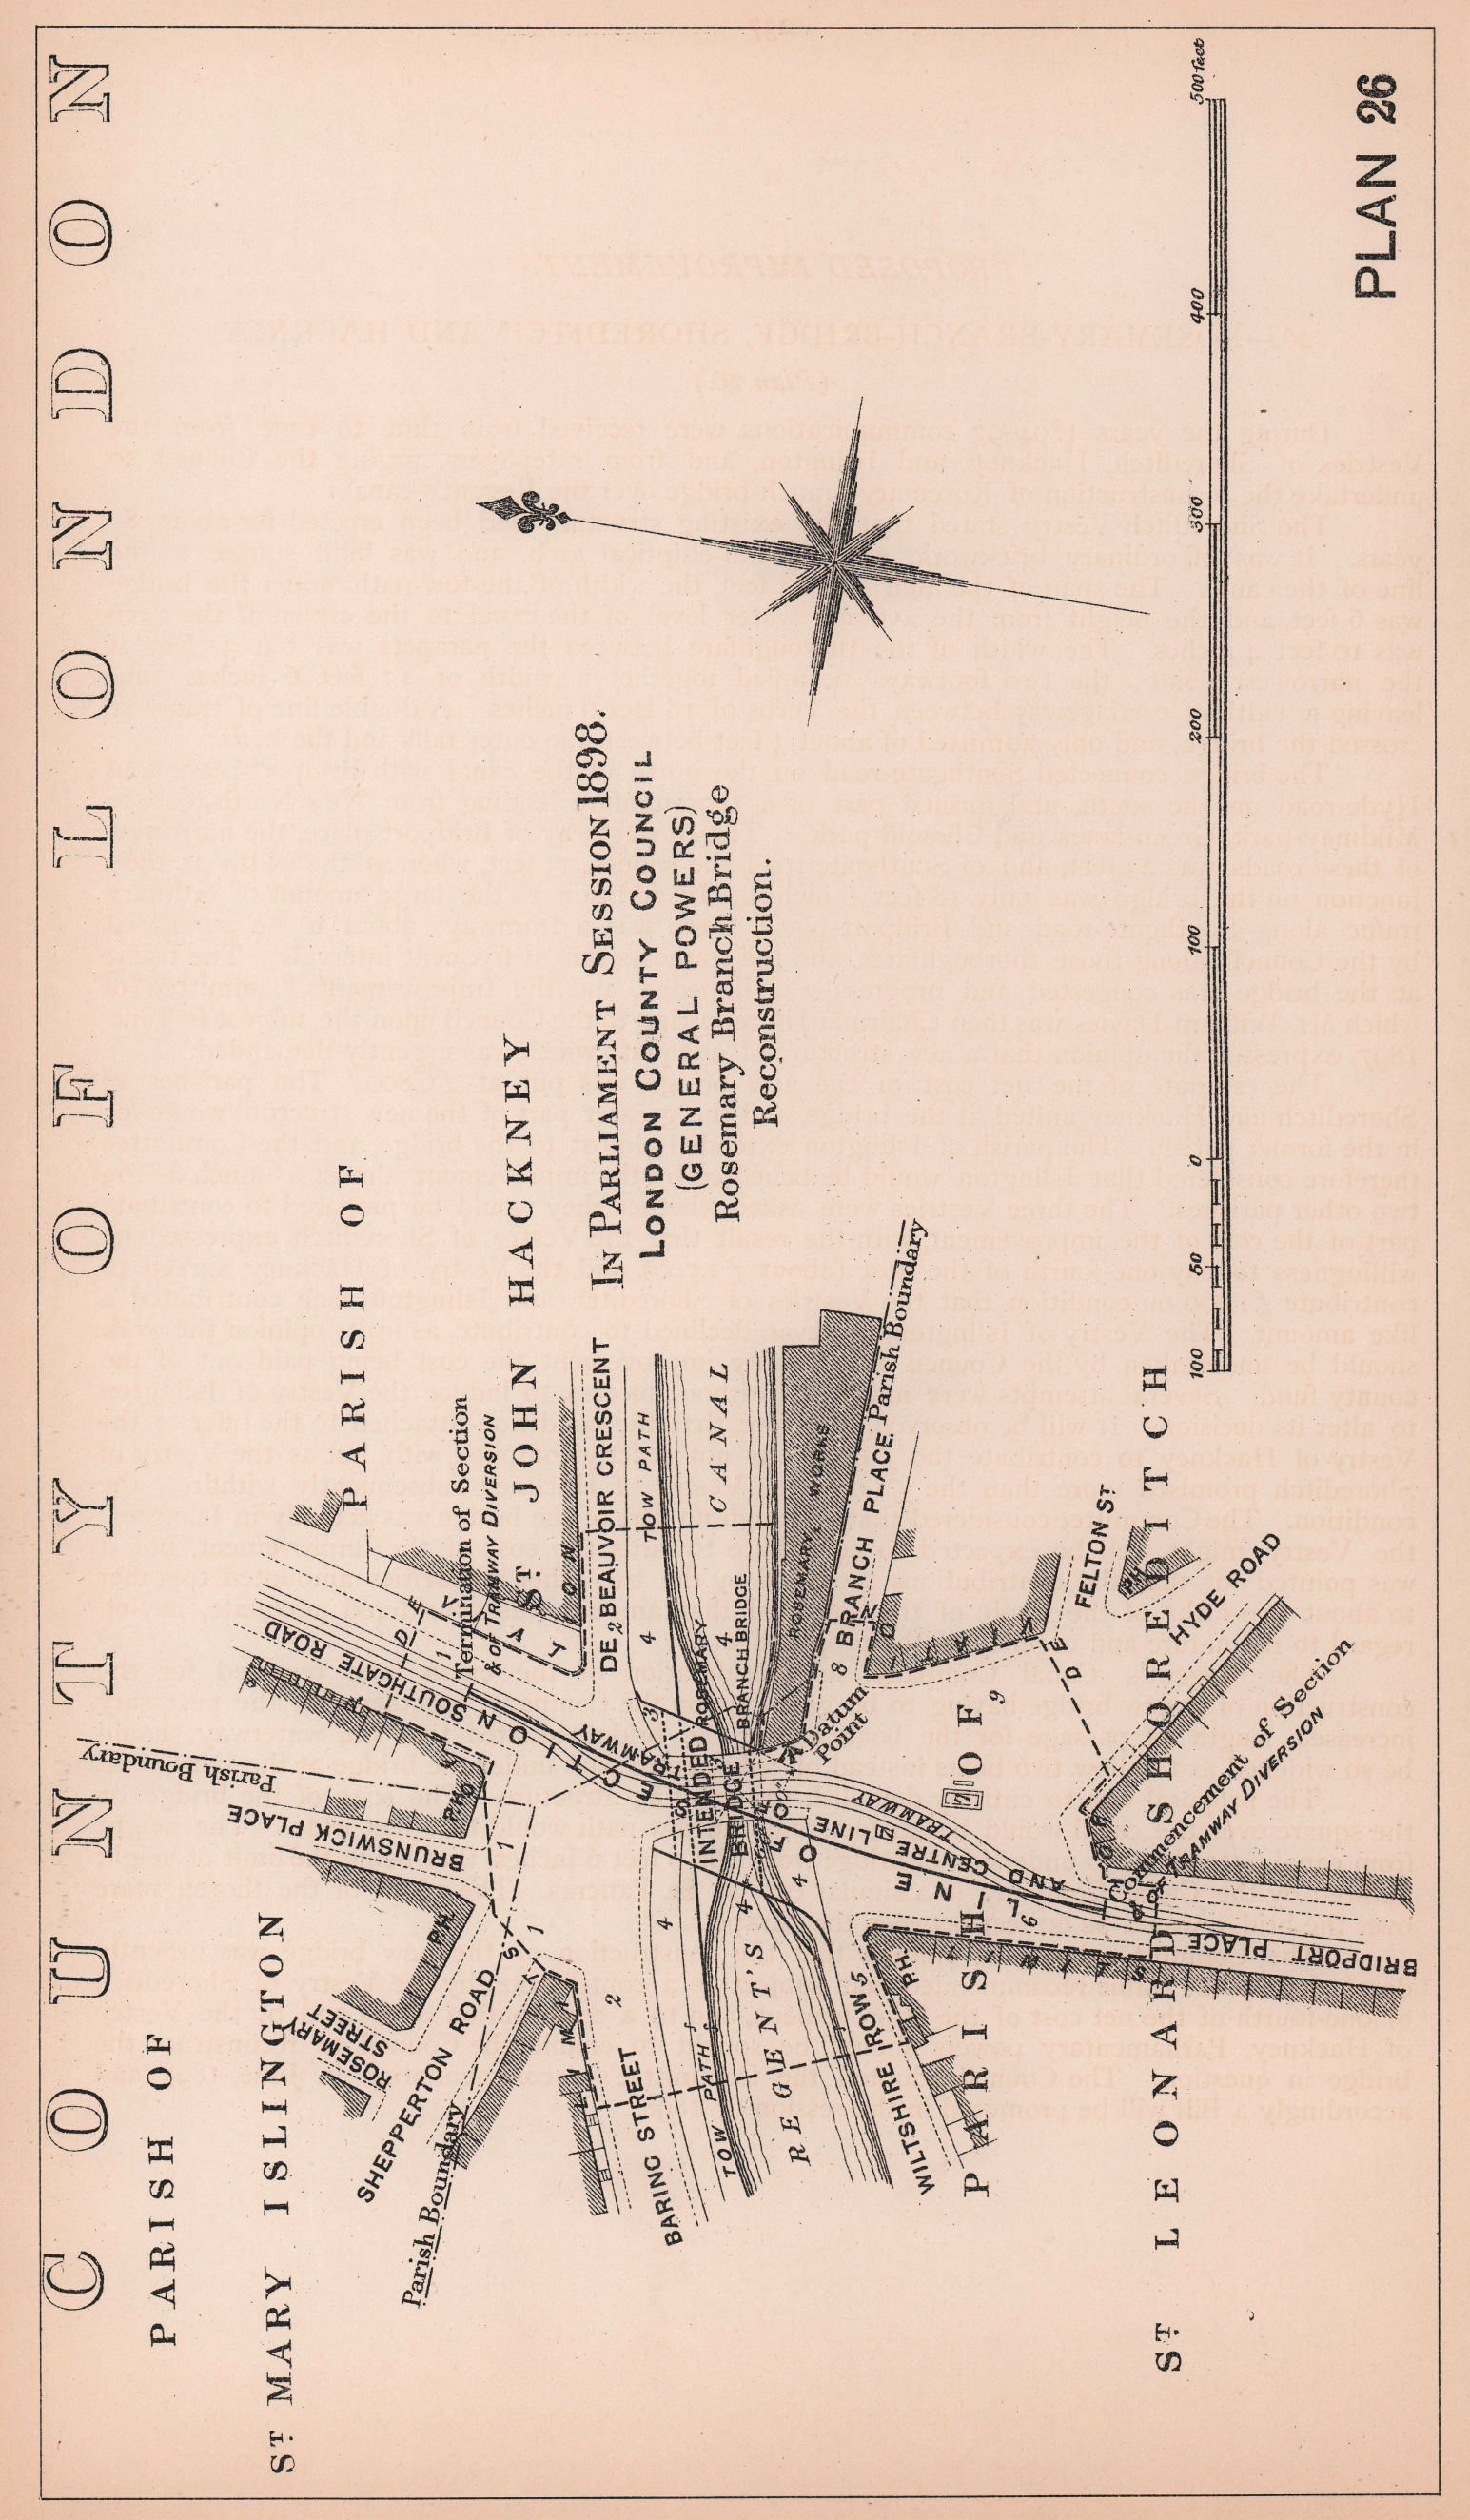 1898 Rosemary Branch Bridge reconstruction. Regents Canal. Haggerston 1898 map